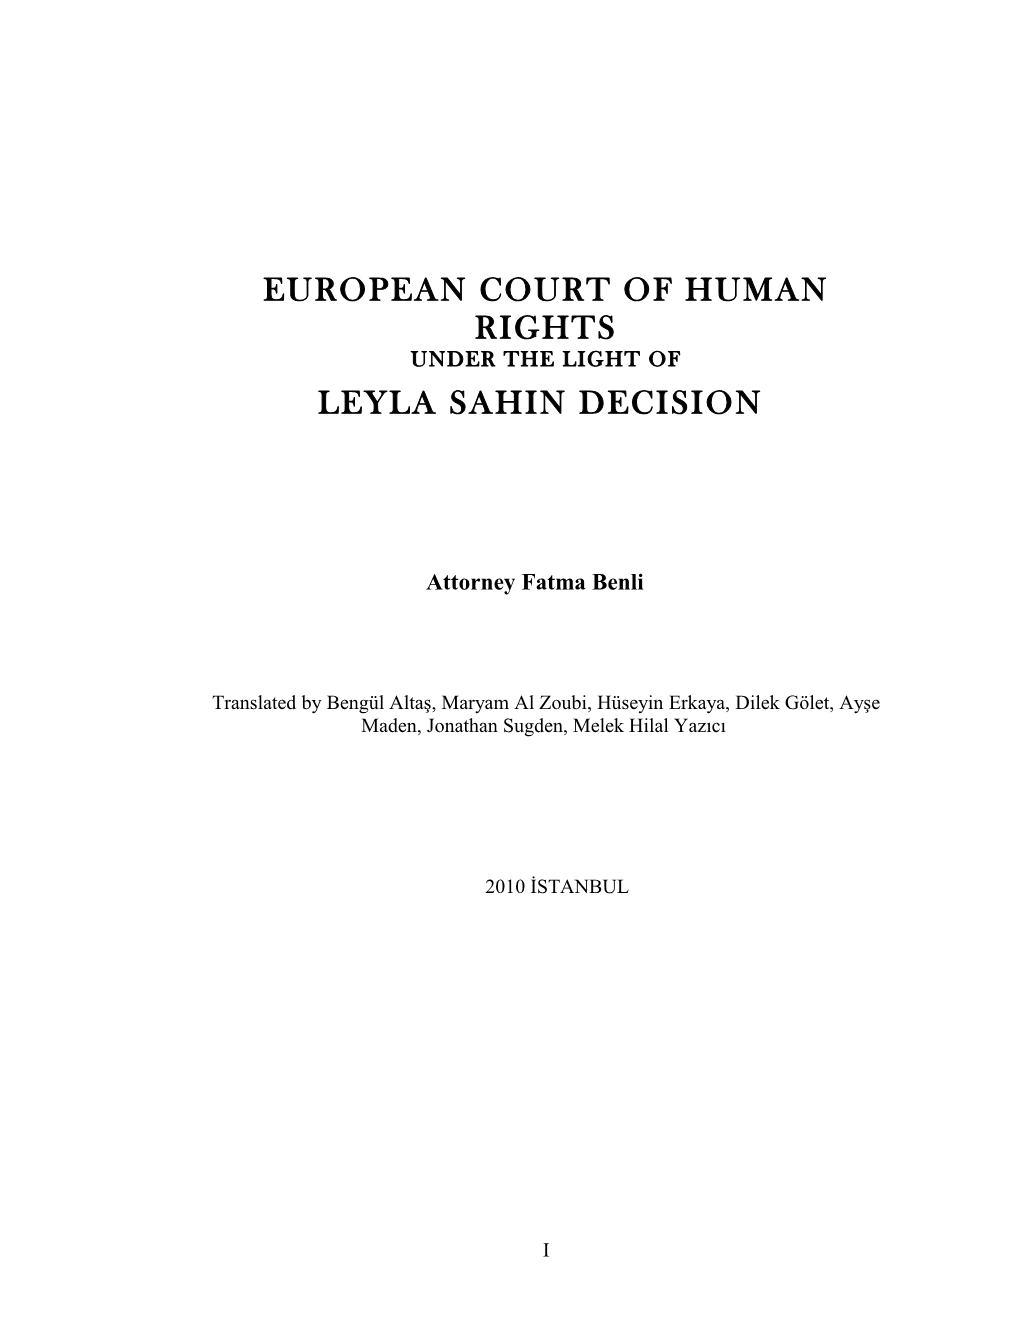 European Court of Human Rights Leyla Sahin Decision